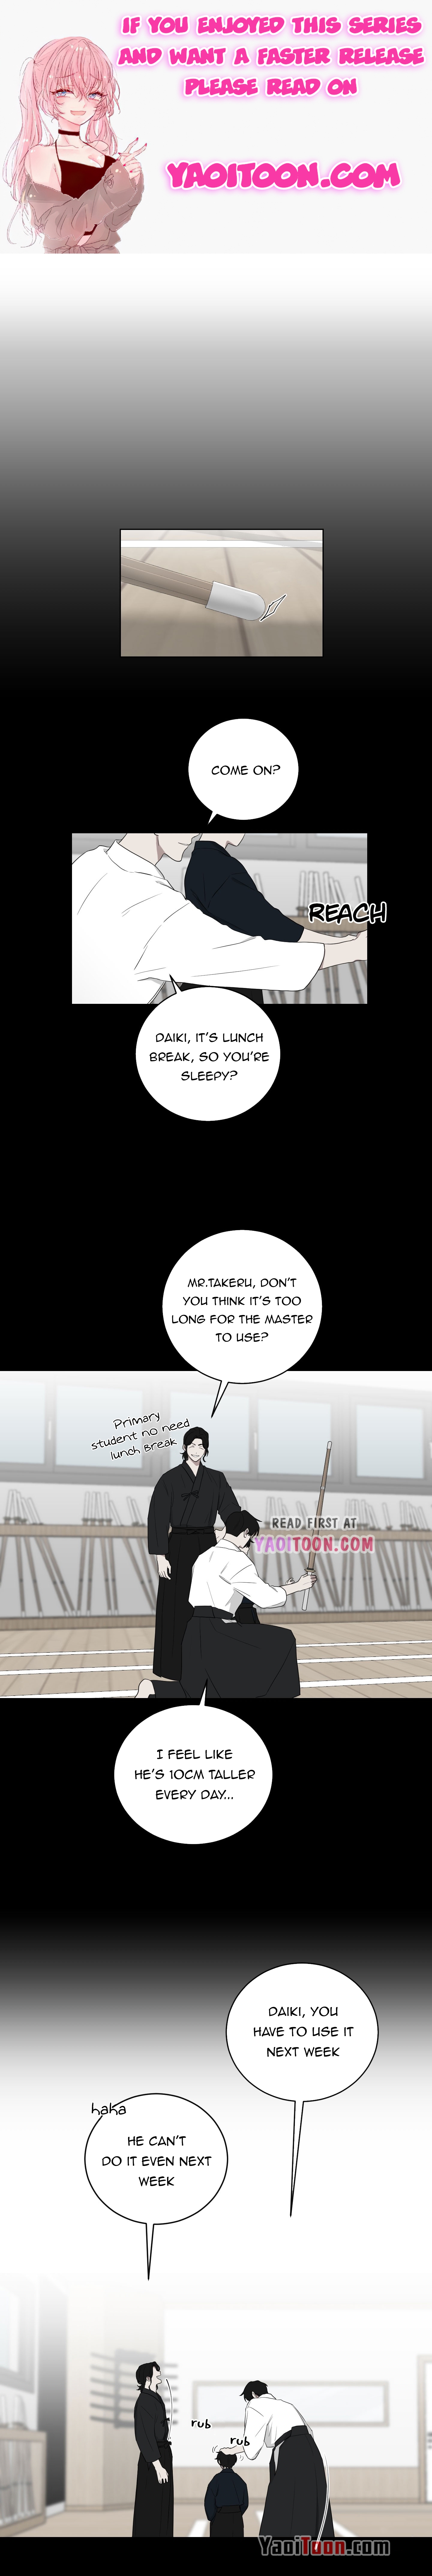 When The Yakuza Falls Inlove - Page 1